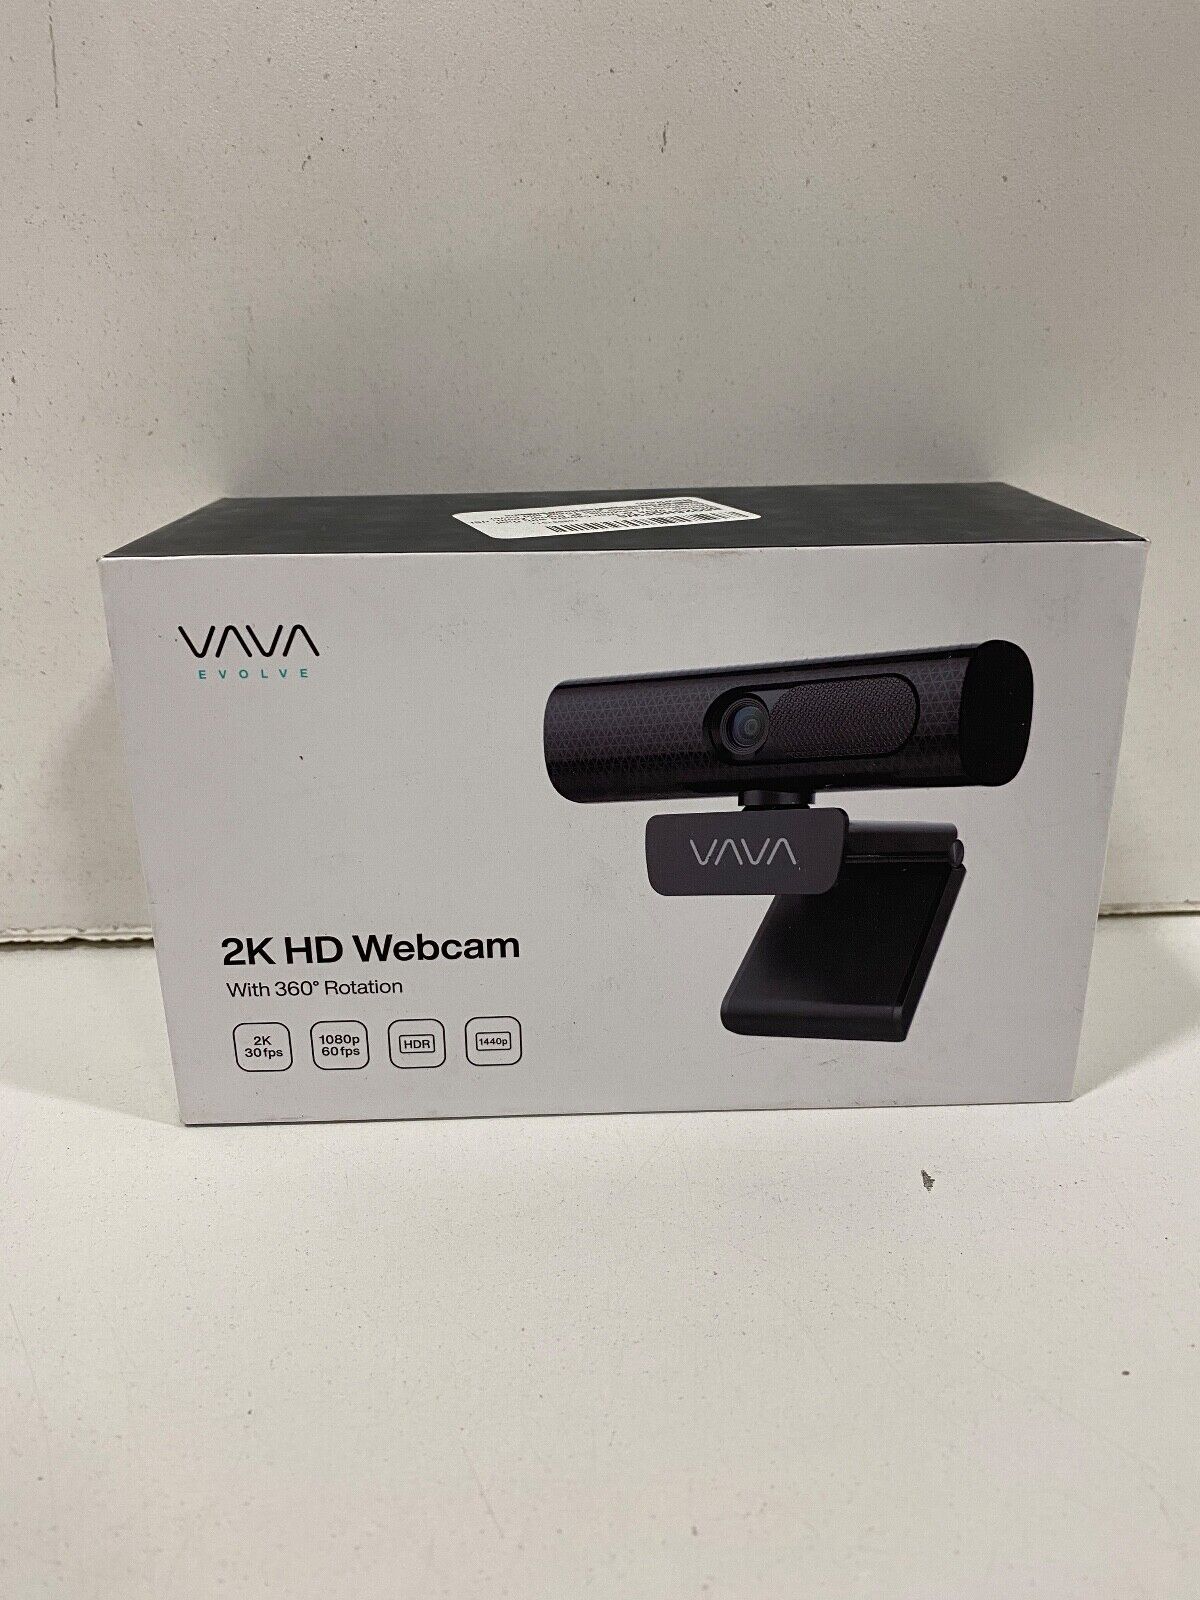 VAVA Evolve 2k HD Webcam With 360 Degree Rotation